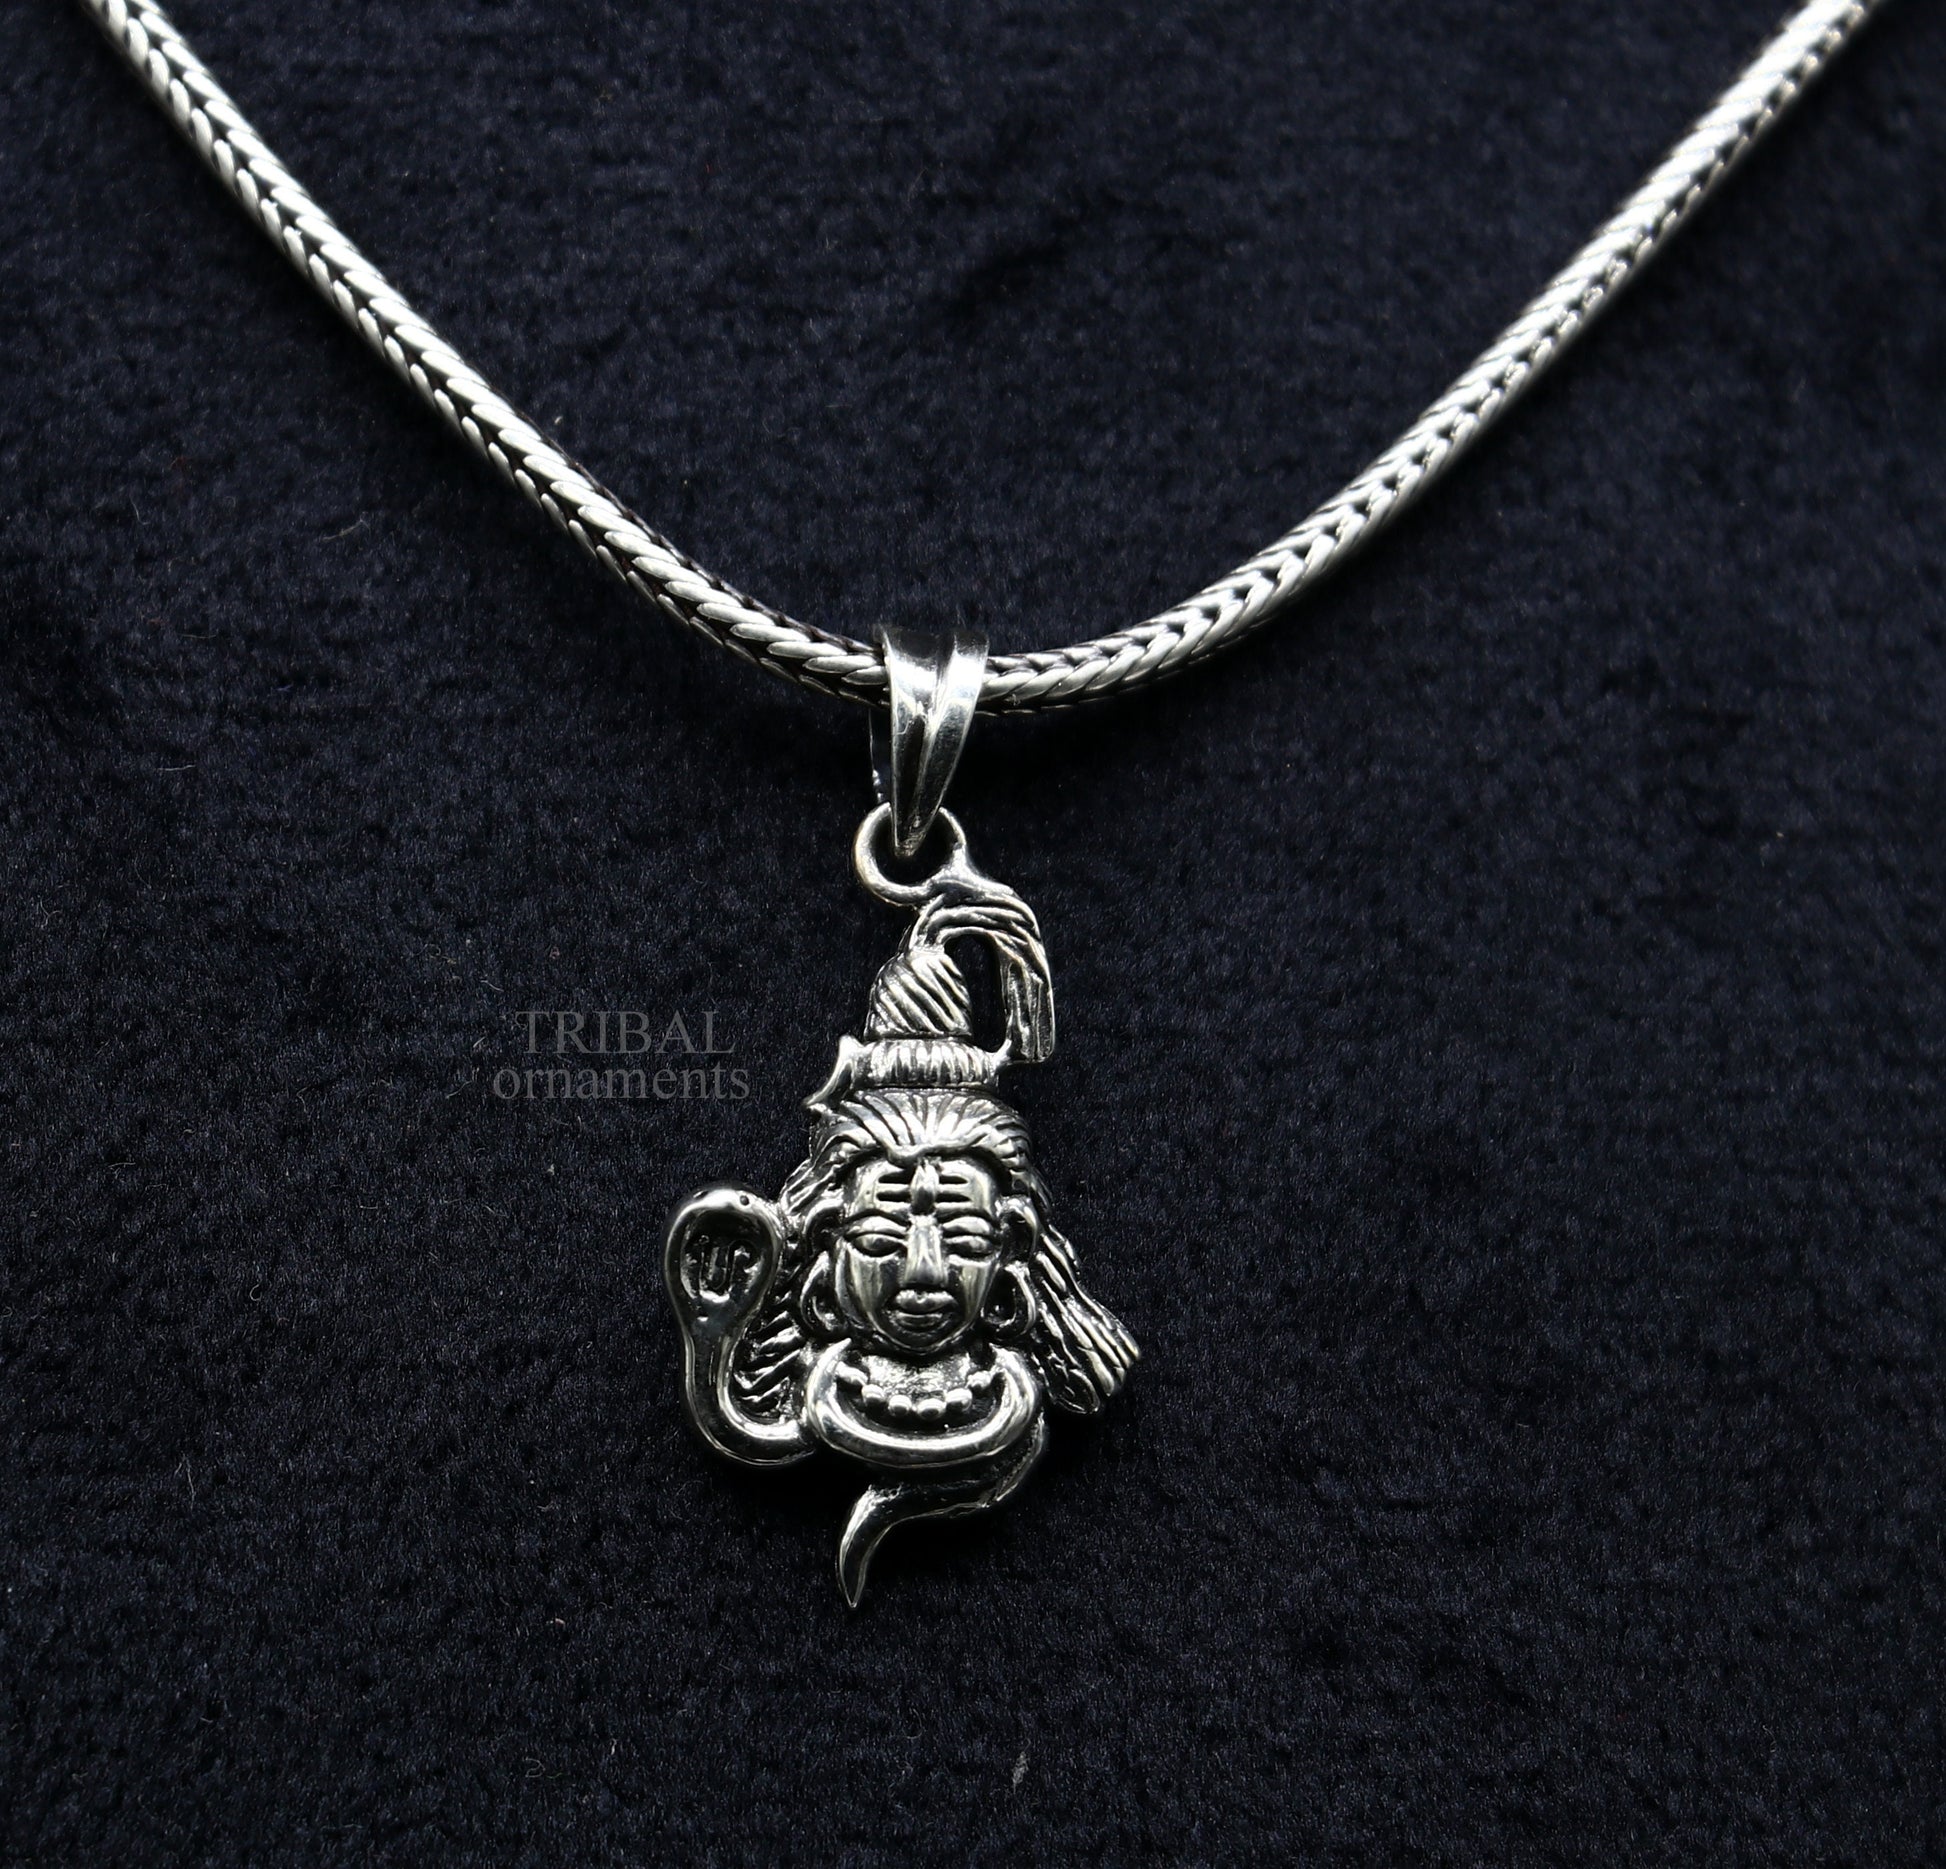 925 sterling silver amazing designer Hindu idol Lord Shiva pendant, excellent gifting unisex locket pendant customized jewelry ssp1647